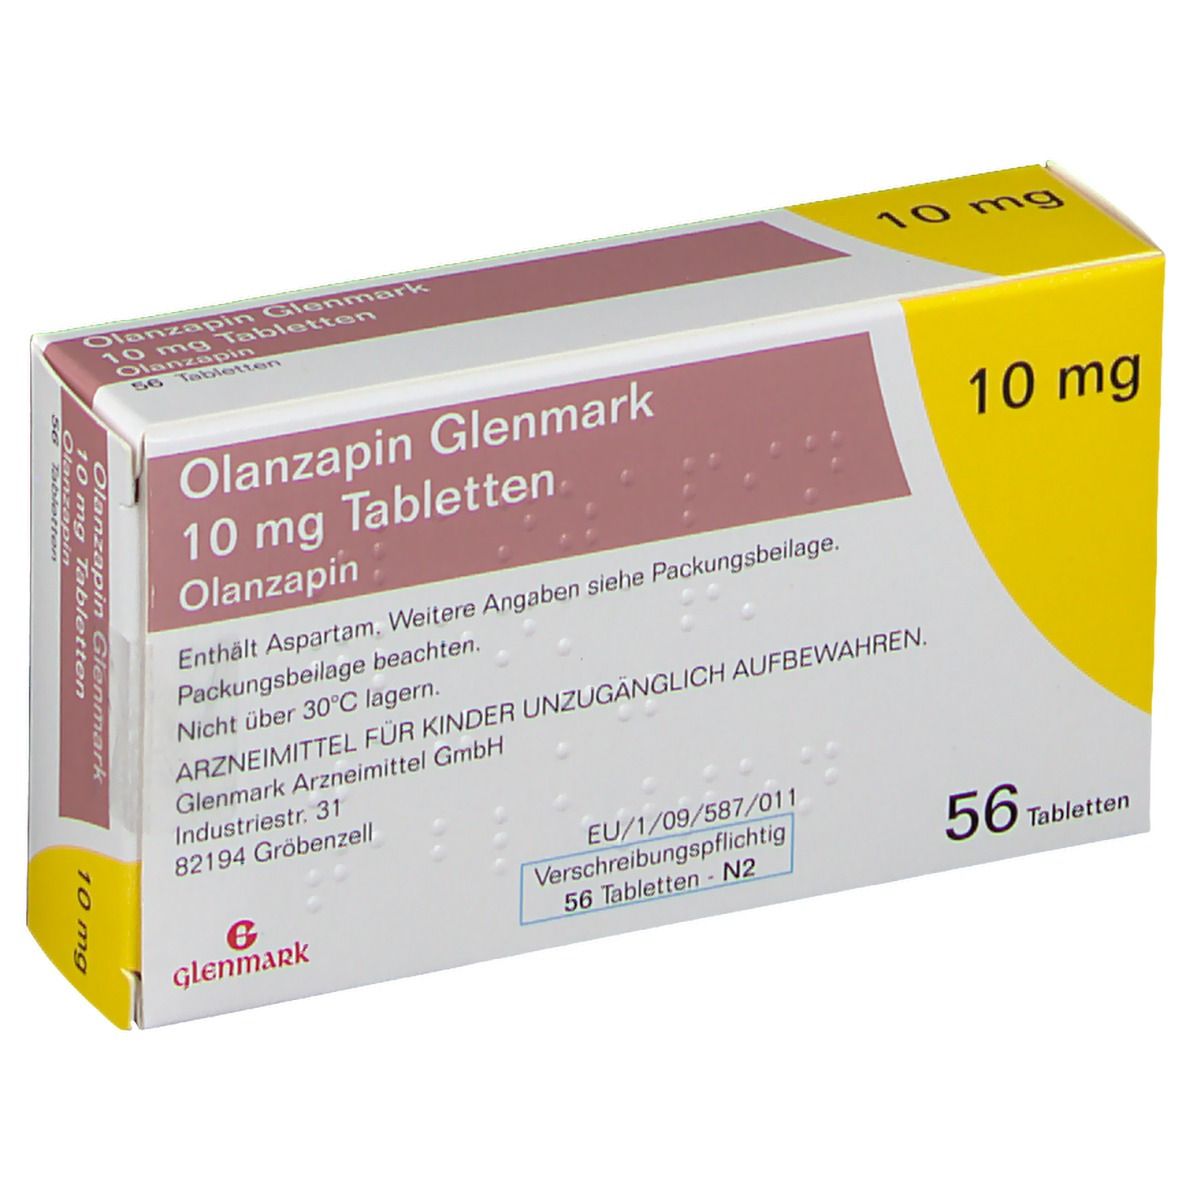 Olanzapin Glenmark 10 mg